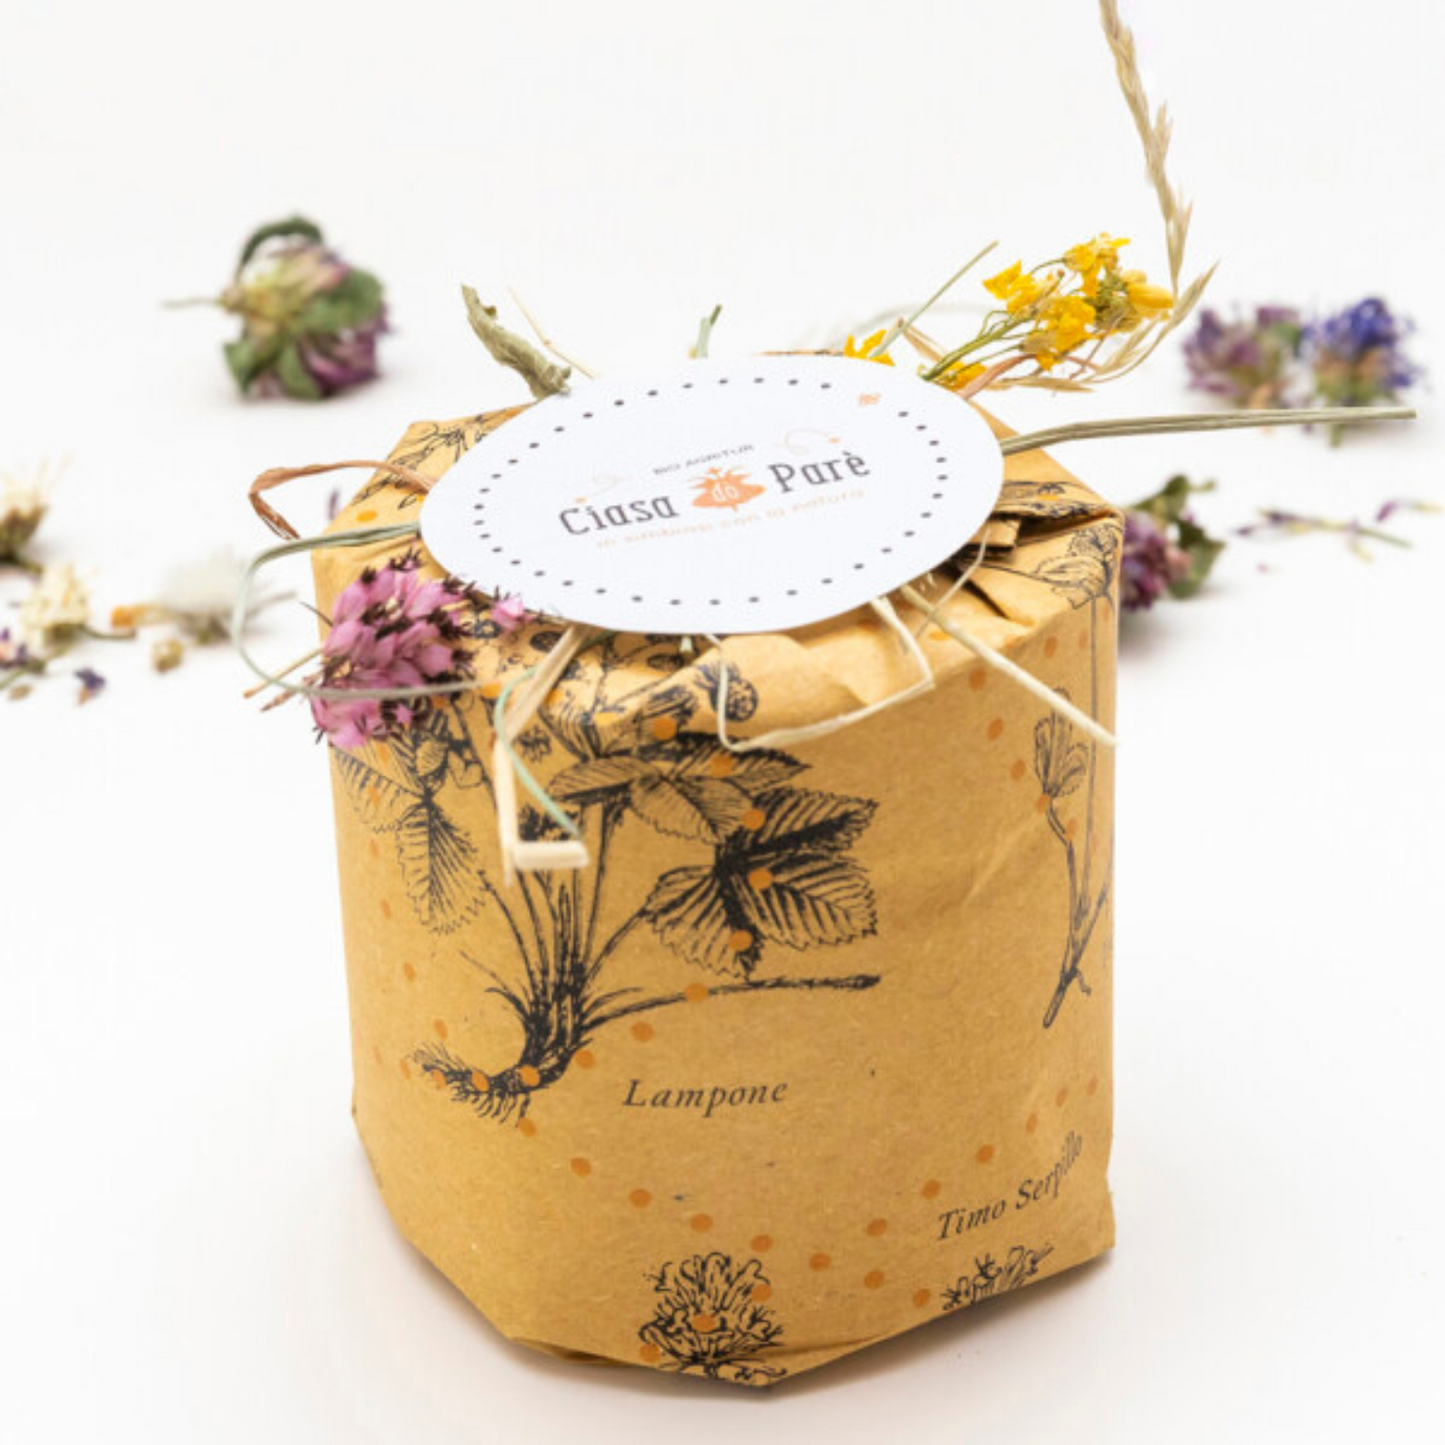 Organic honey from high mountain flowers - Ciasa dò Parè